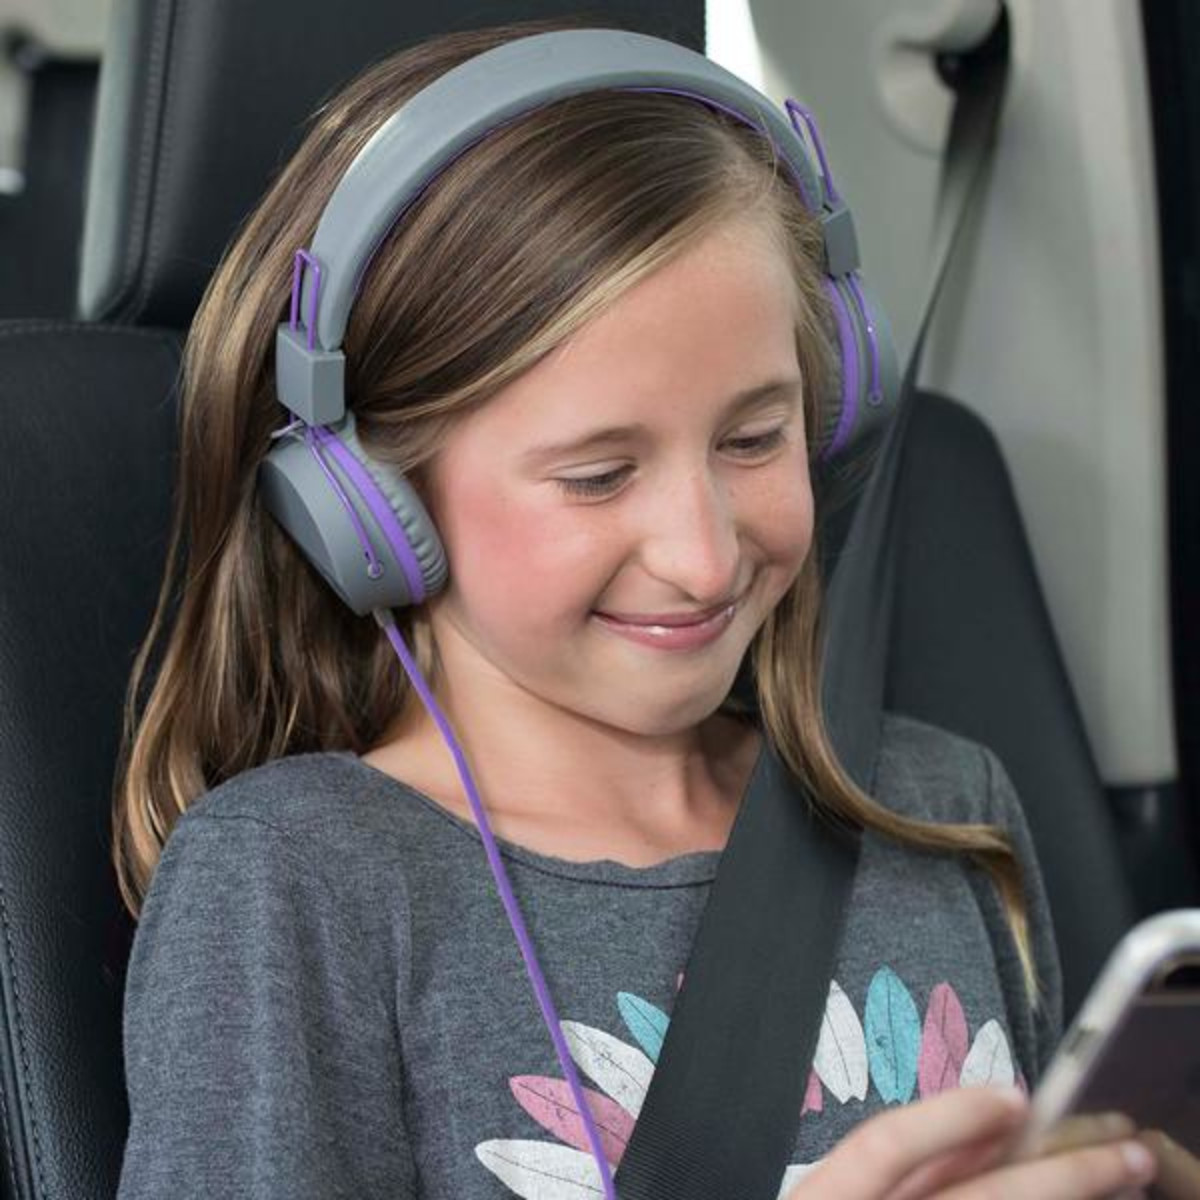 Folding Kids Headphones Purple/Grey